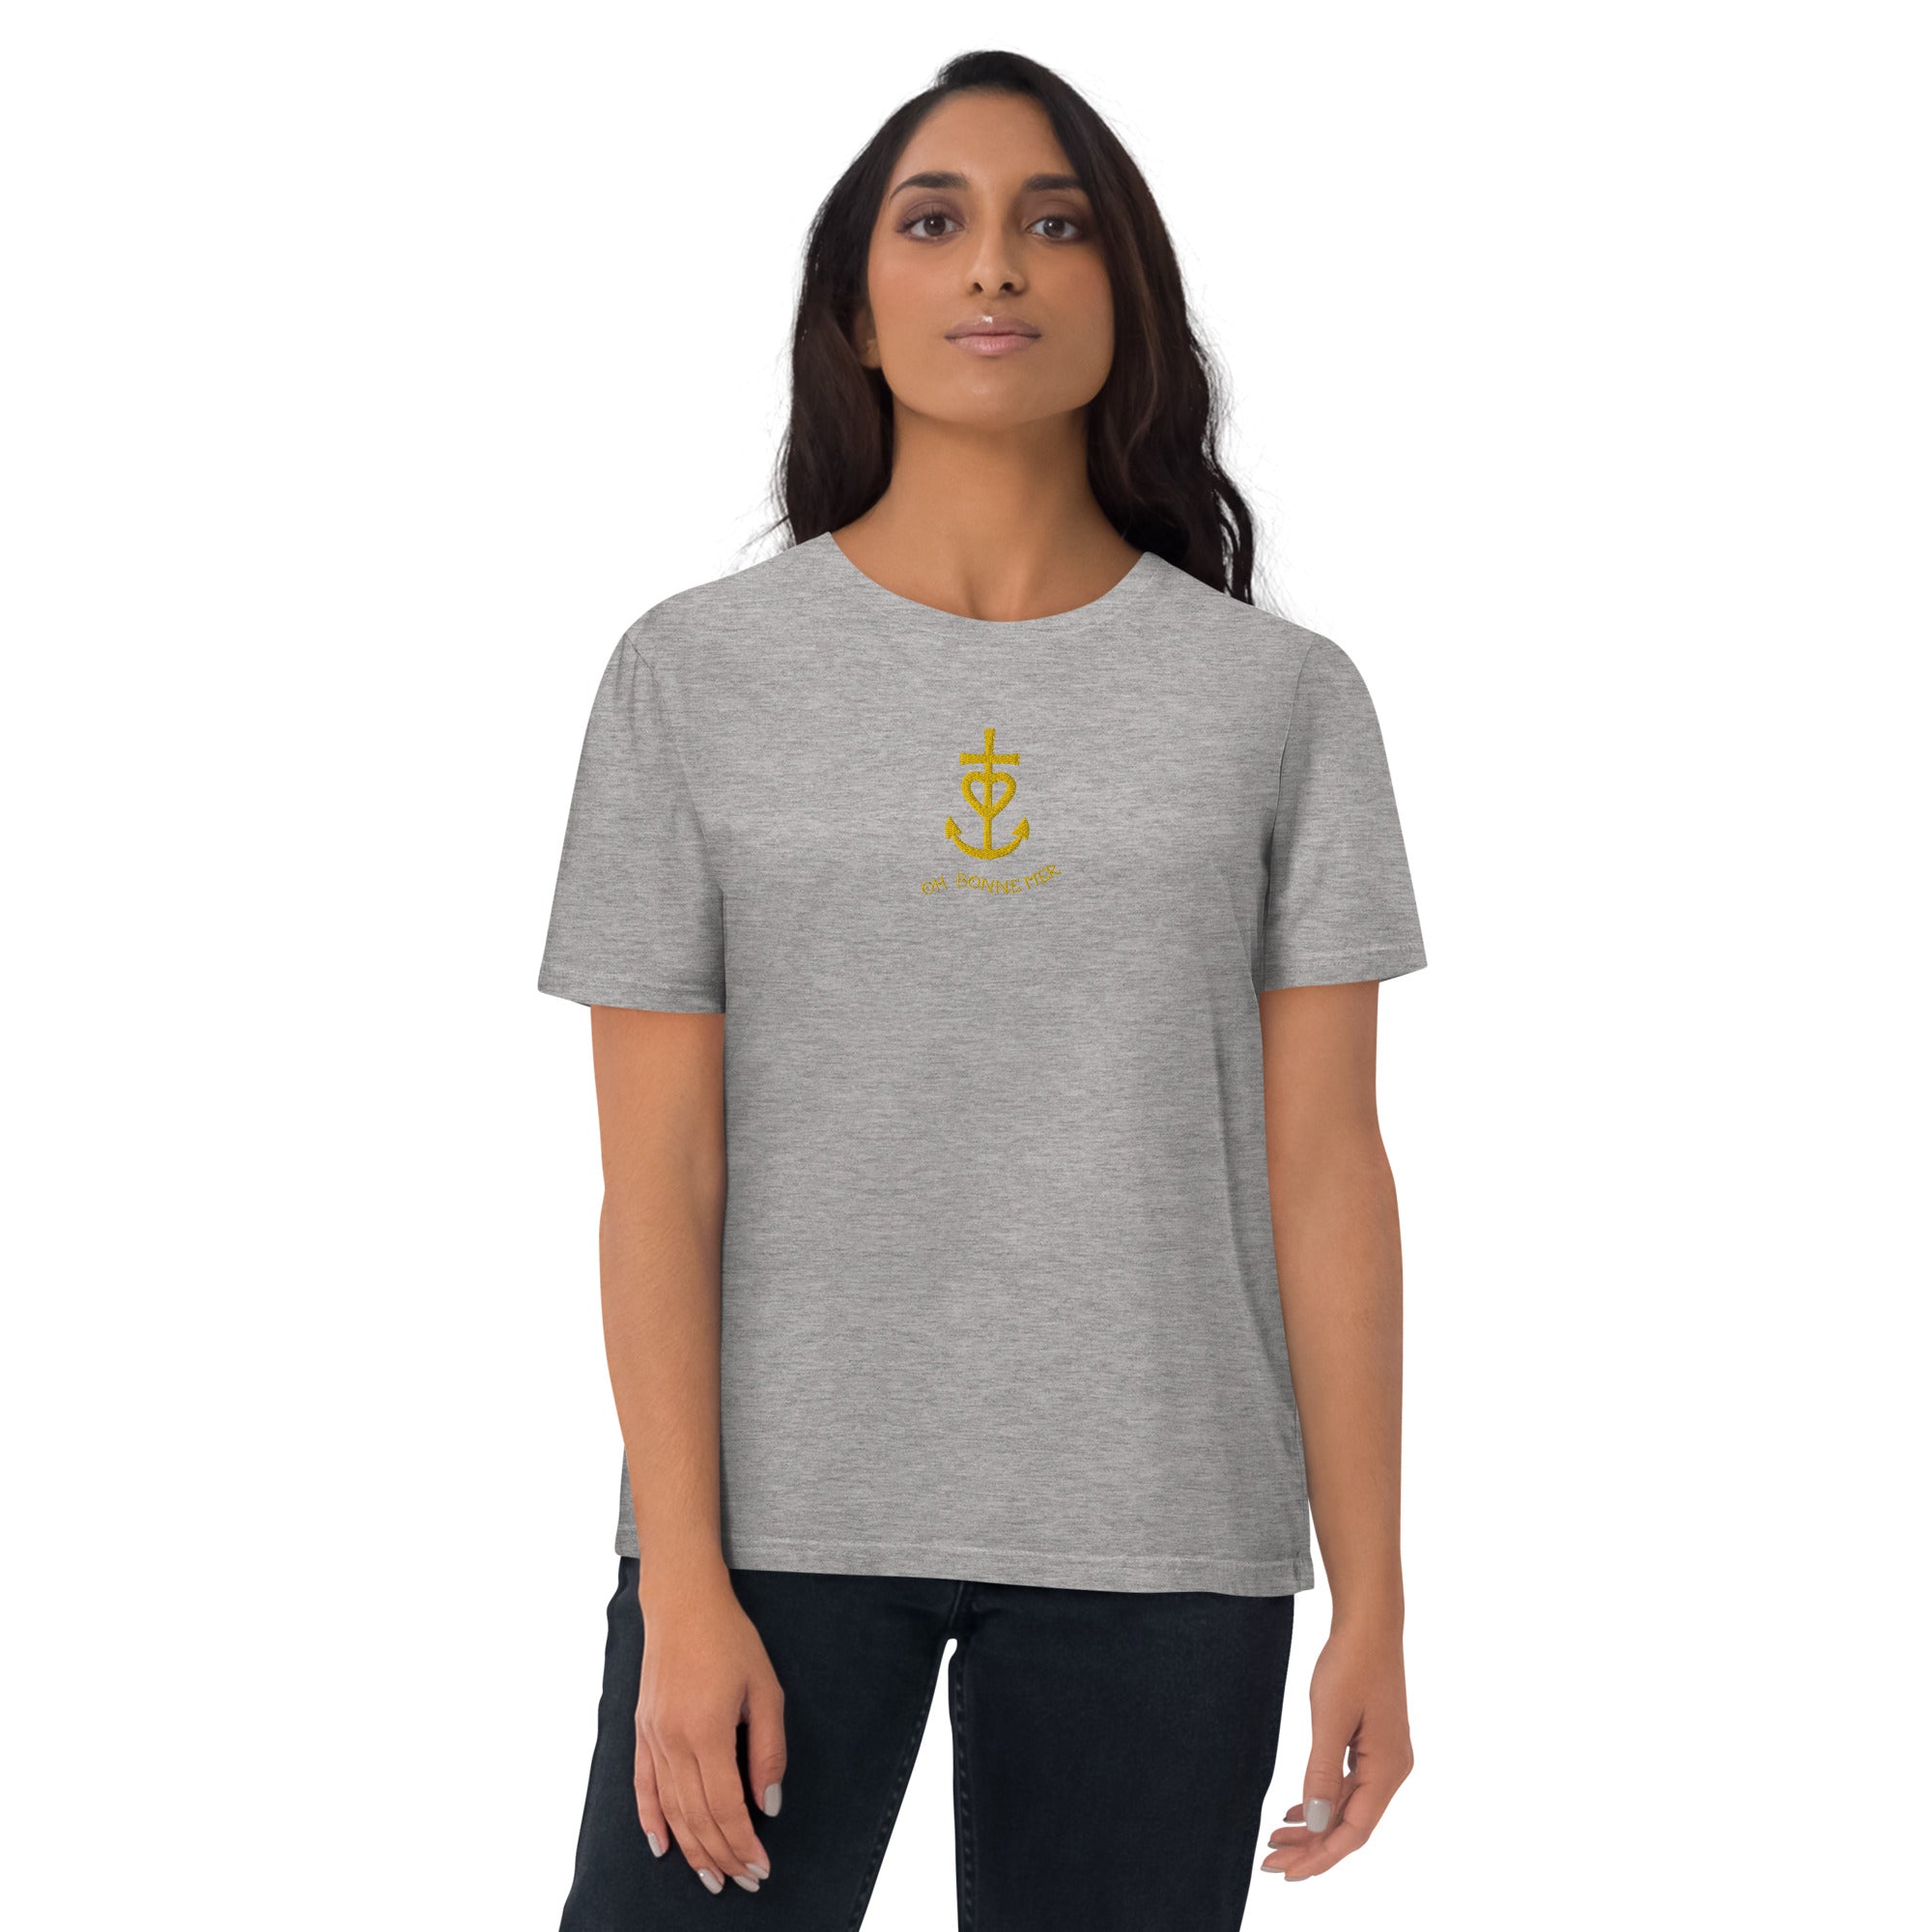 Unisex organic cotton t-shirt Croix de Camargue Gold embroidered pattern on light colors